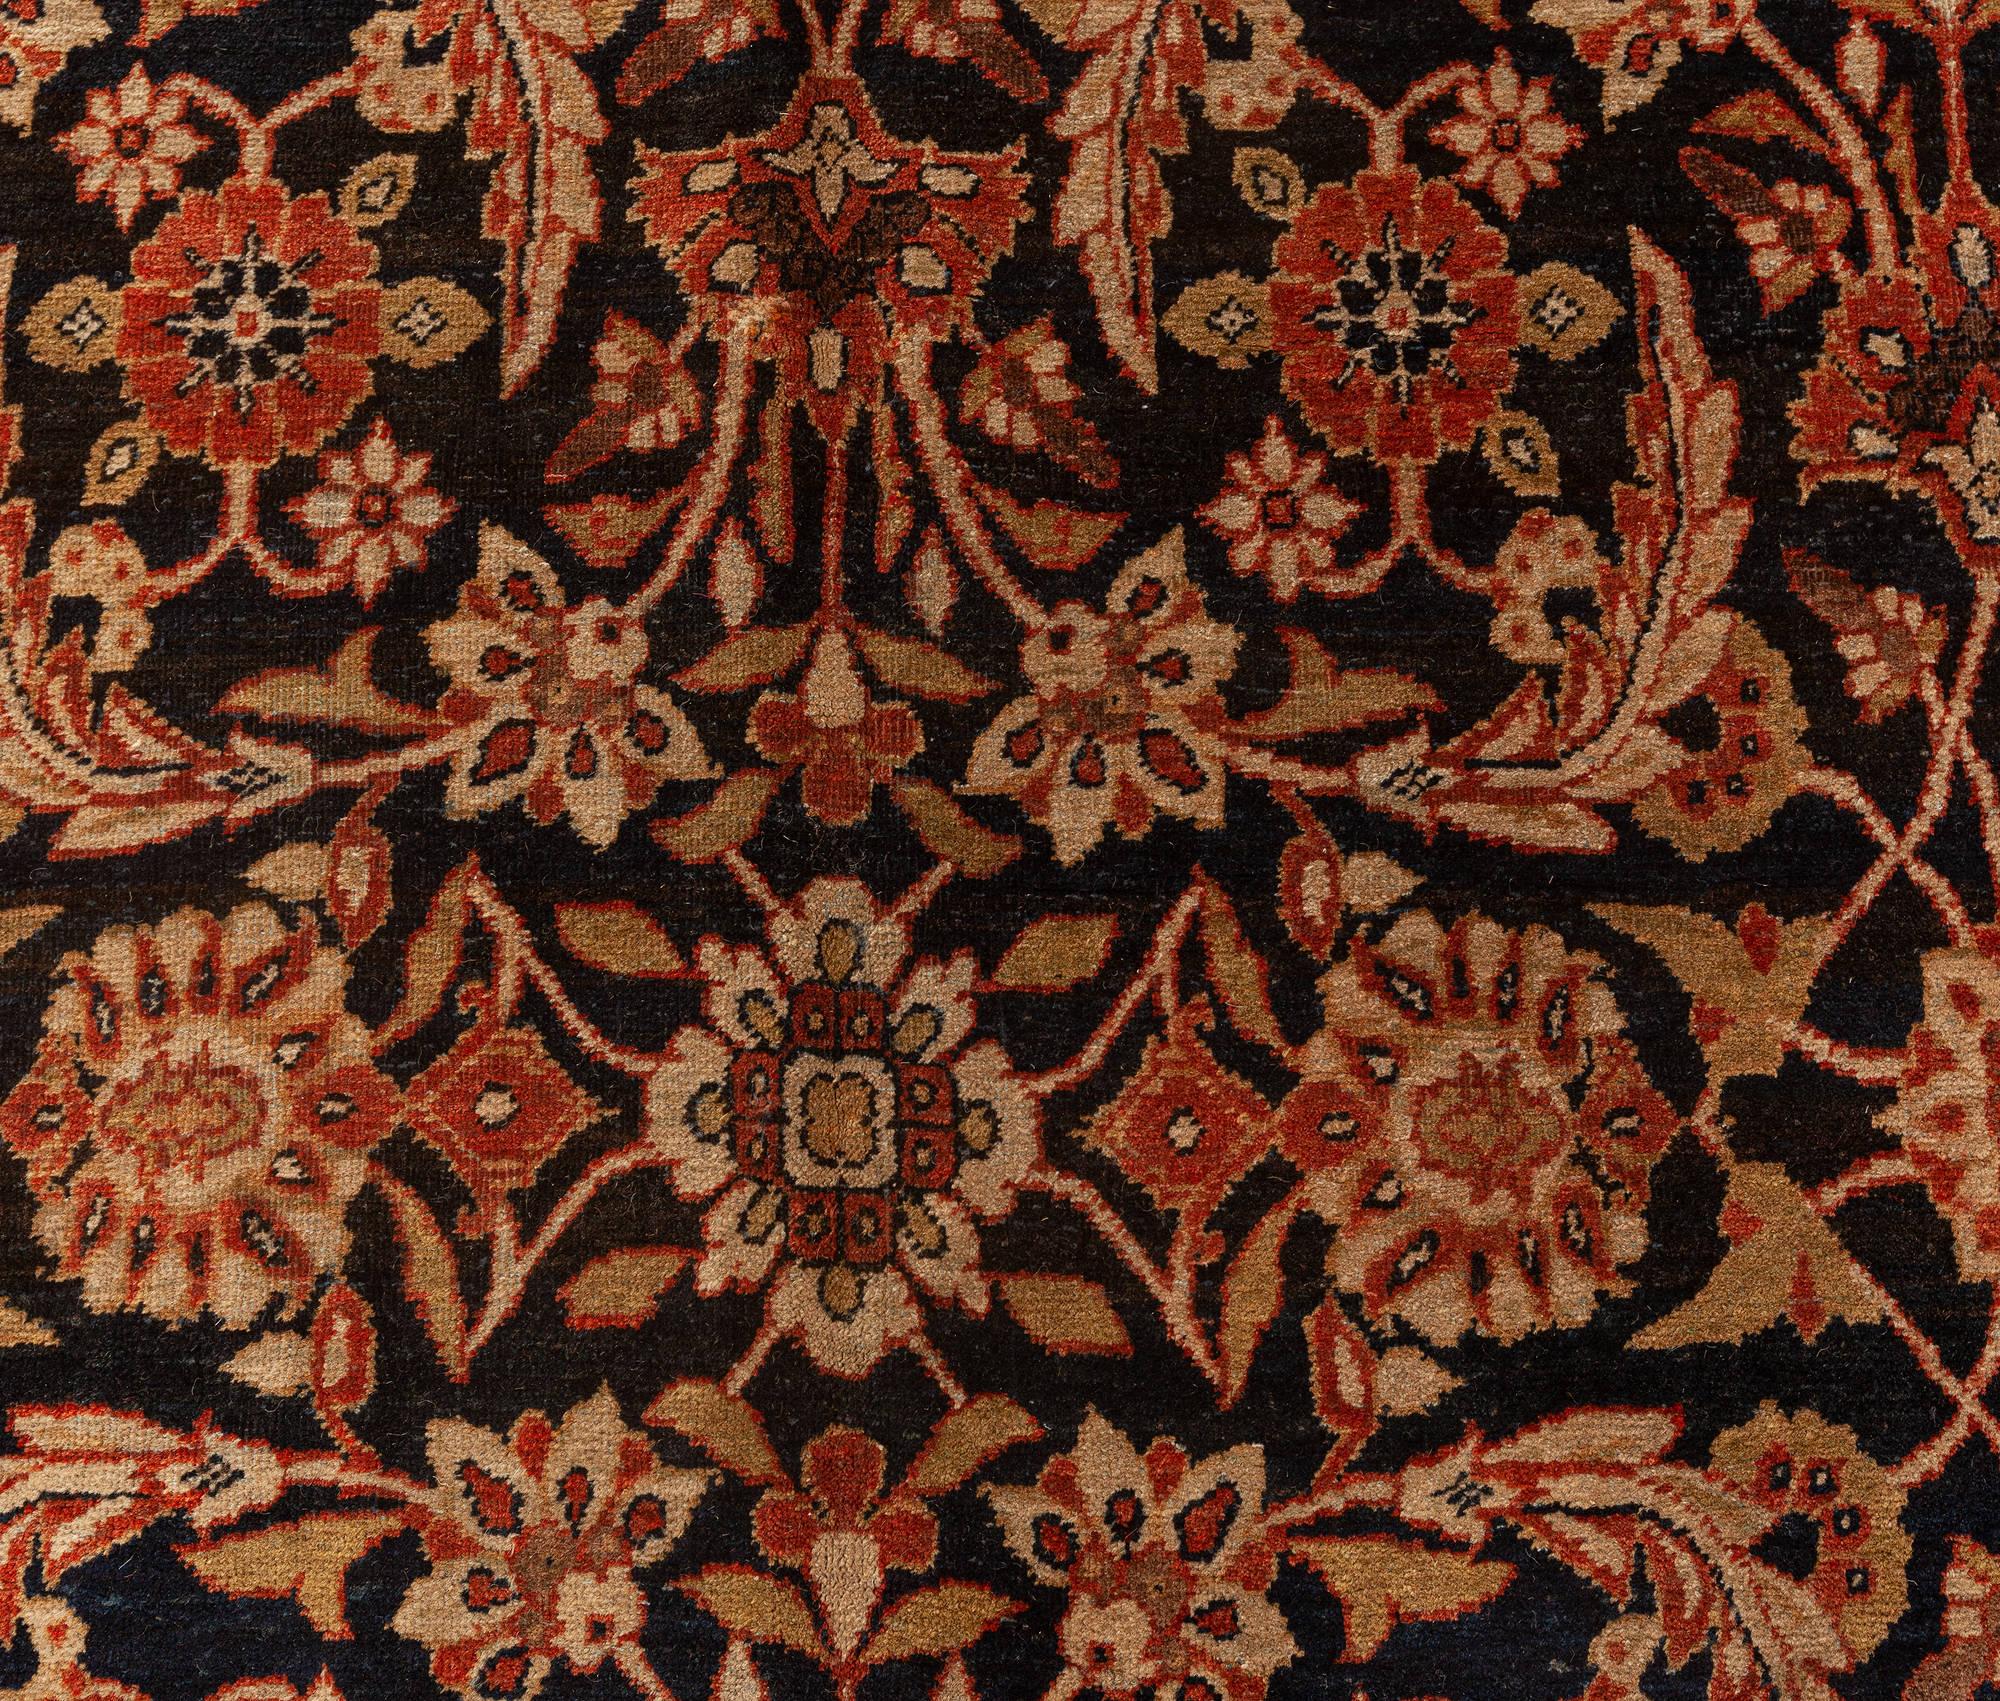 Authentic 19th century Persian Kirman botanic handmade wool rug
Size: 9'2